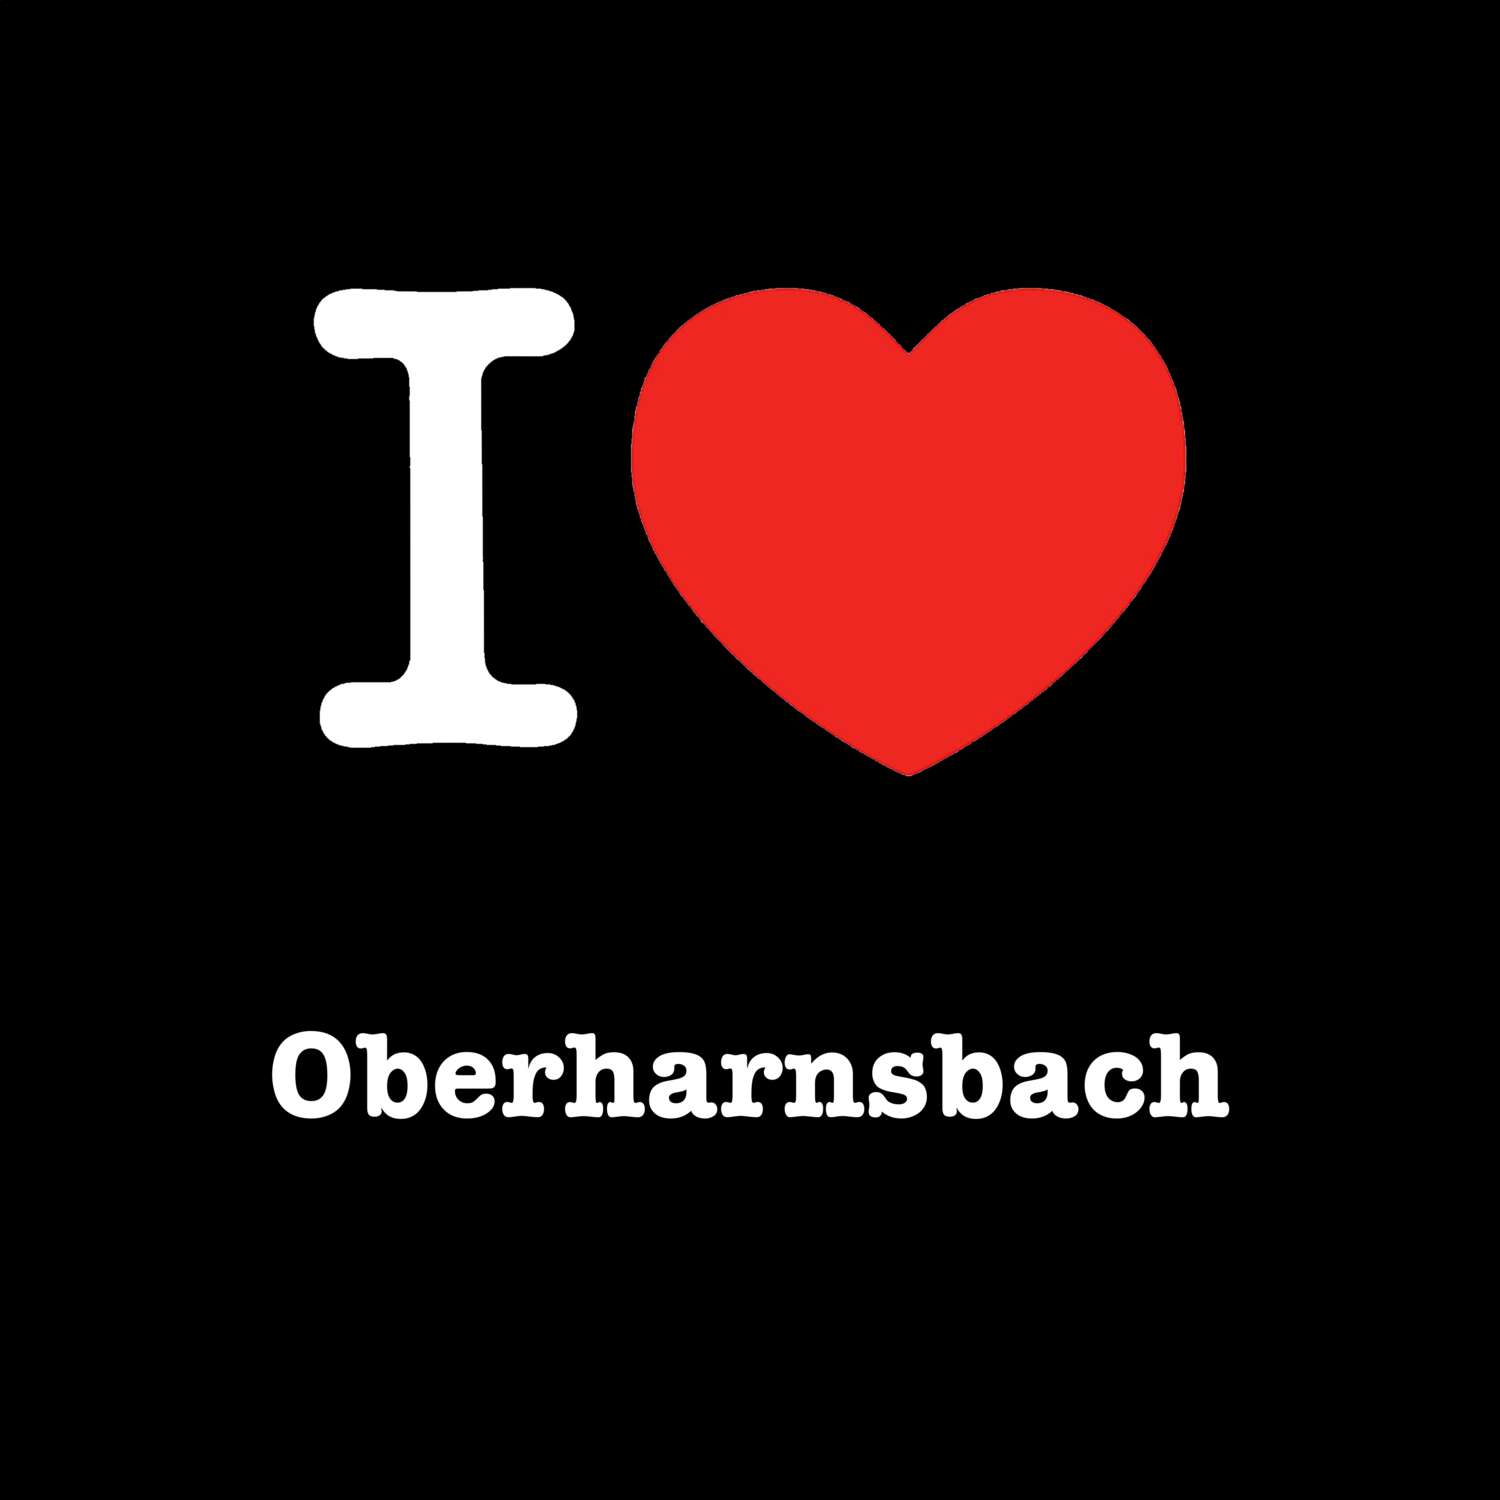 Oberharnsbach T-Shirt »I love«